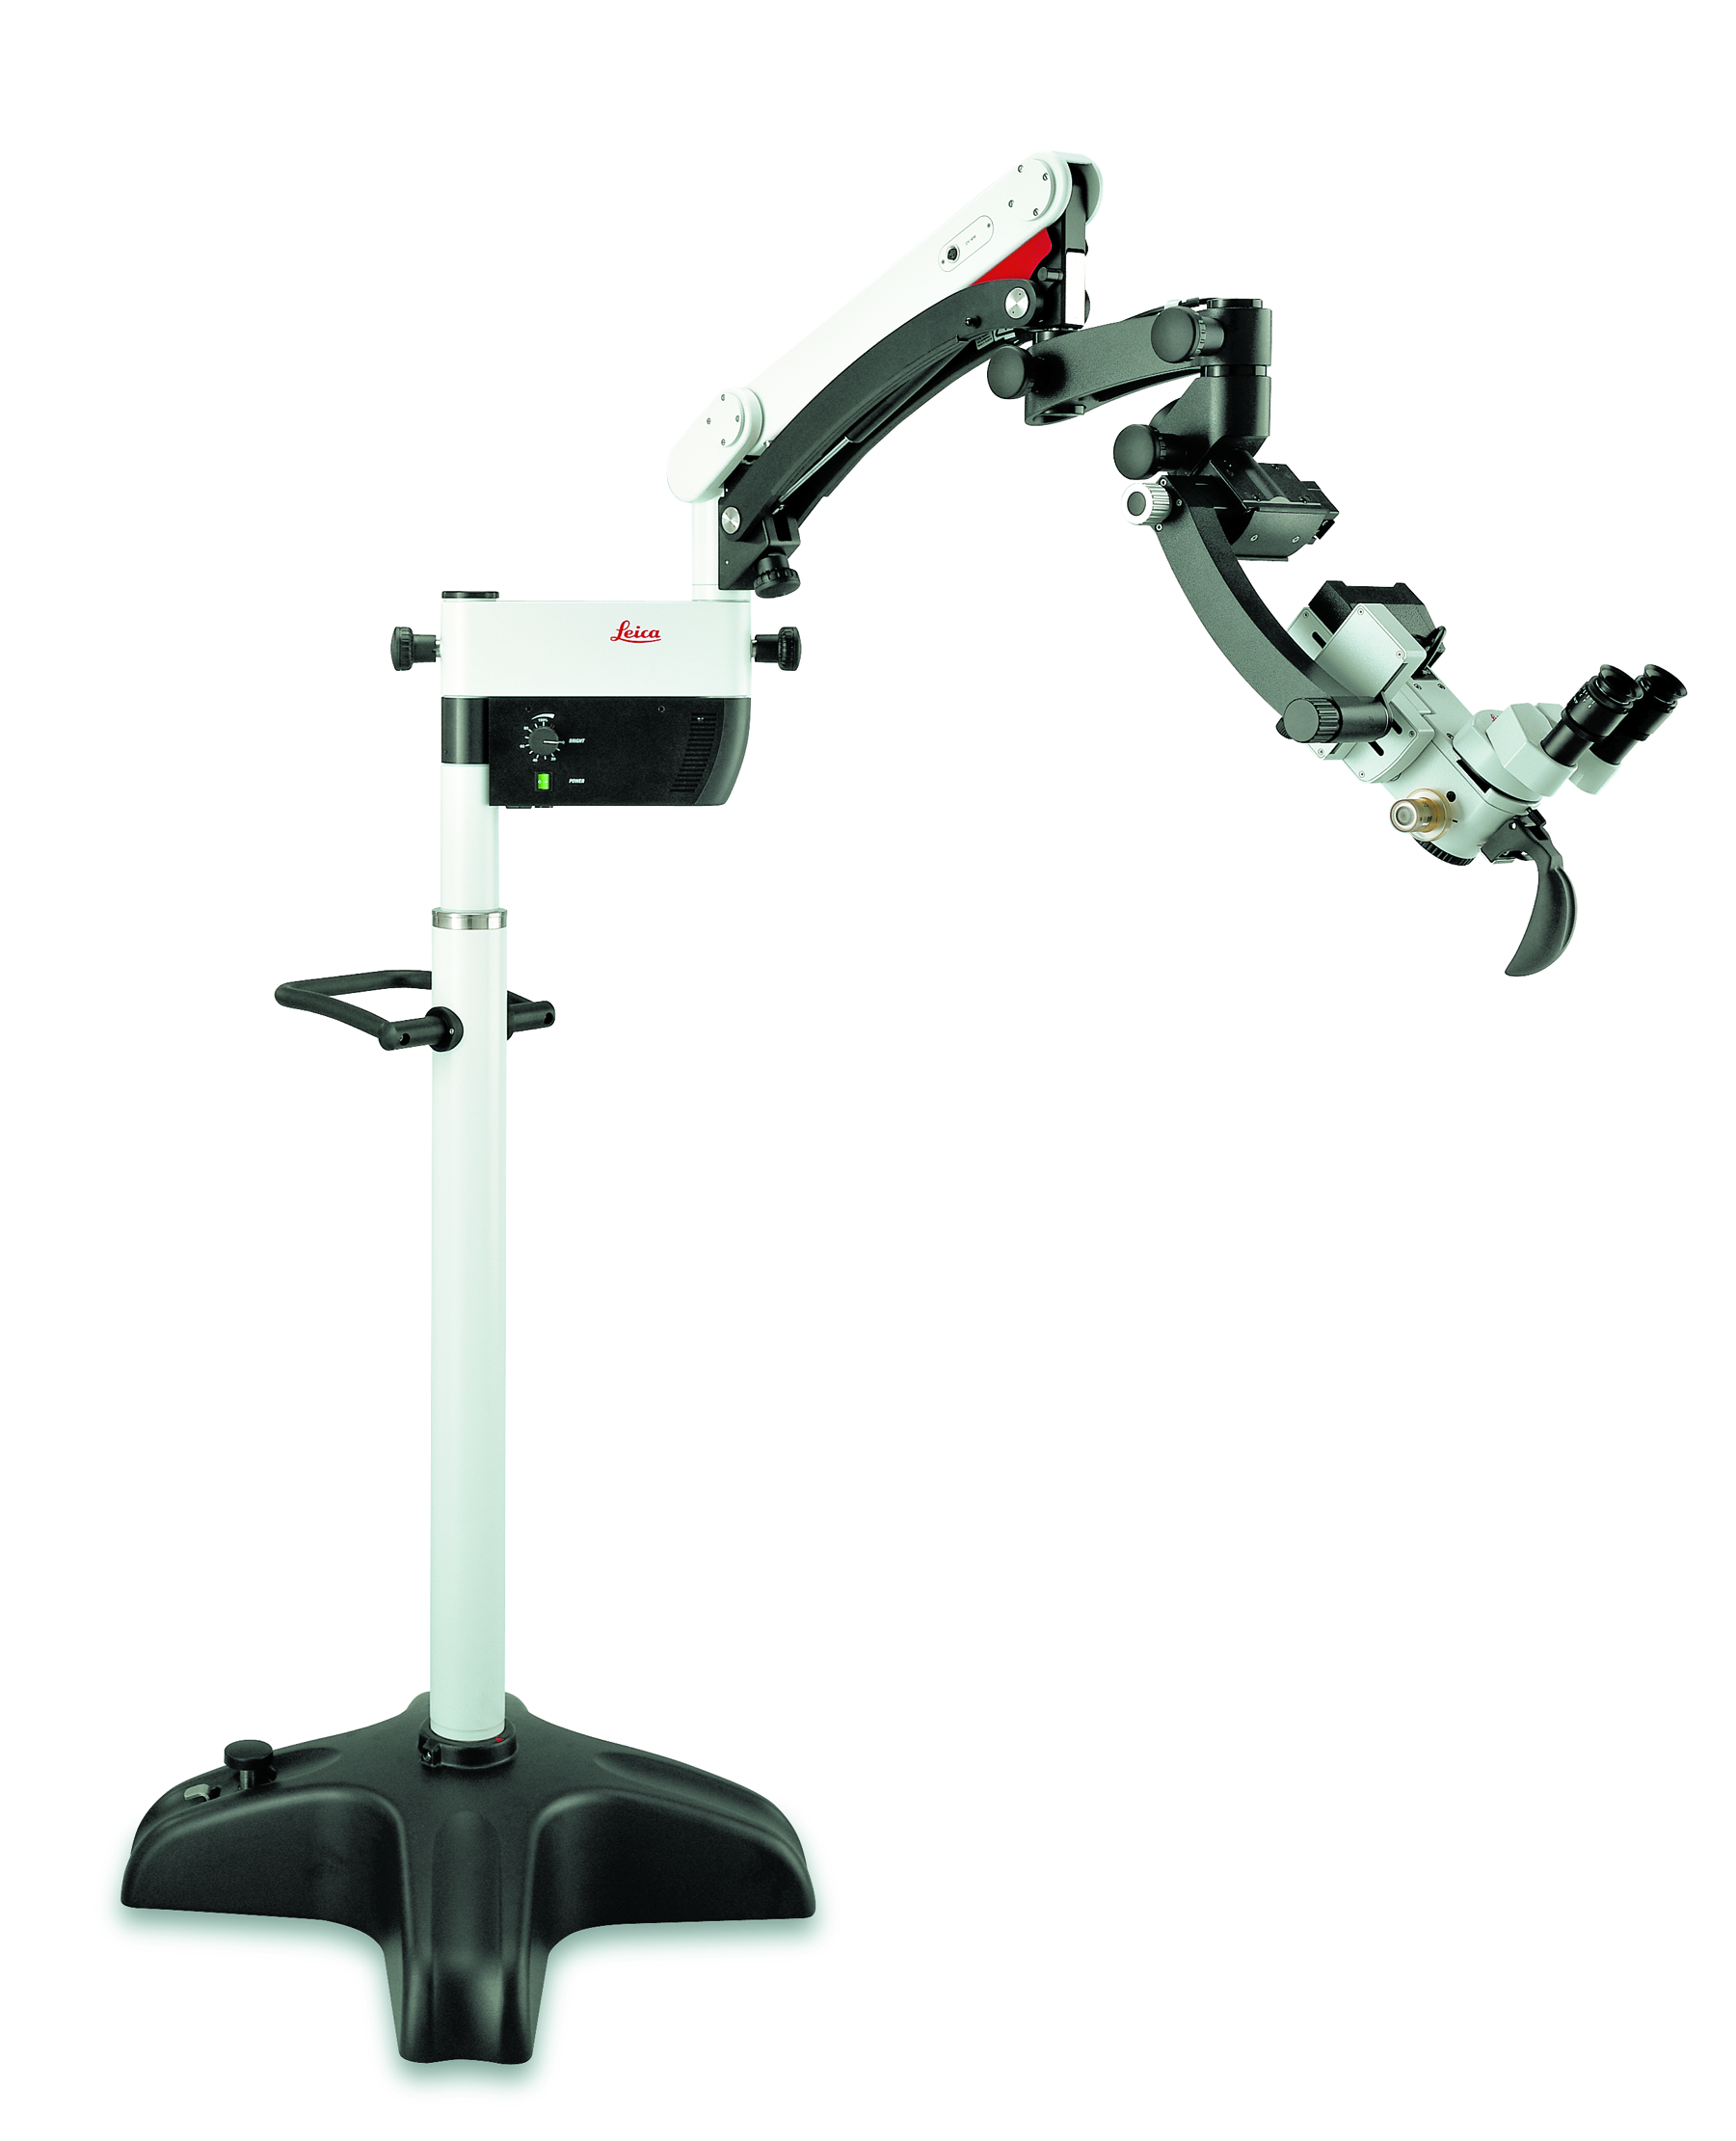 The Leica M400 E surgical microscope ENT surgery